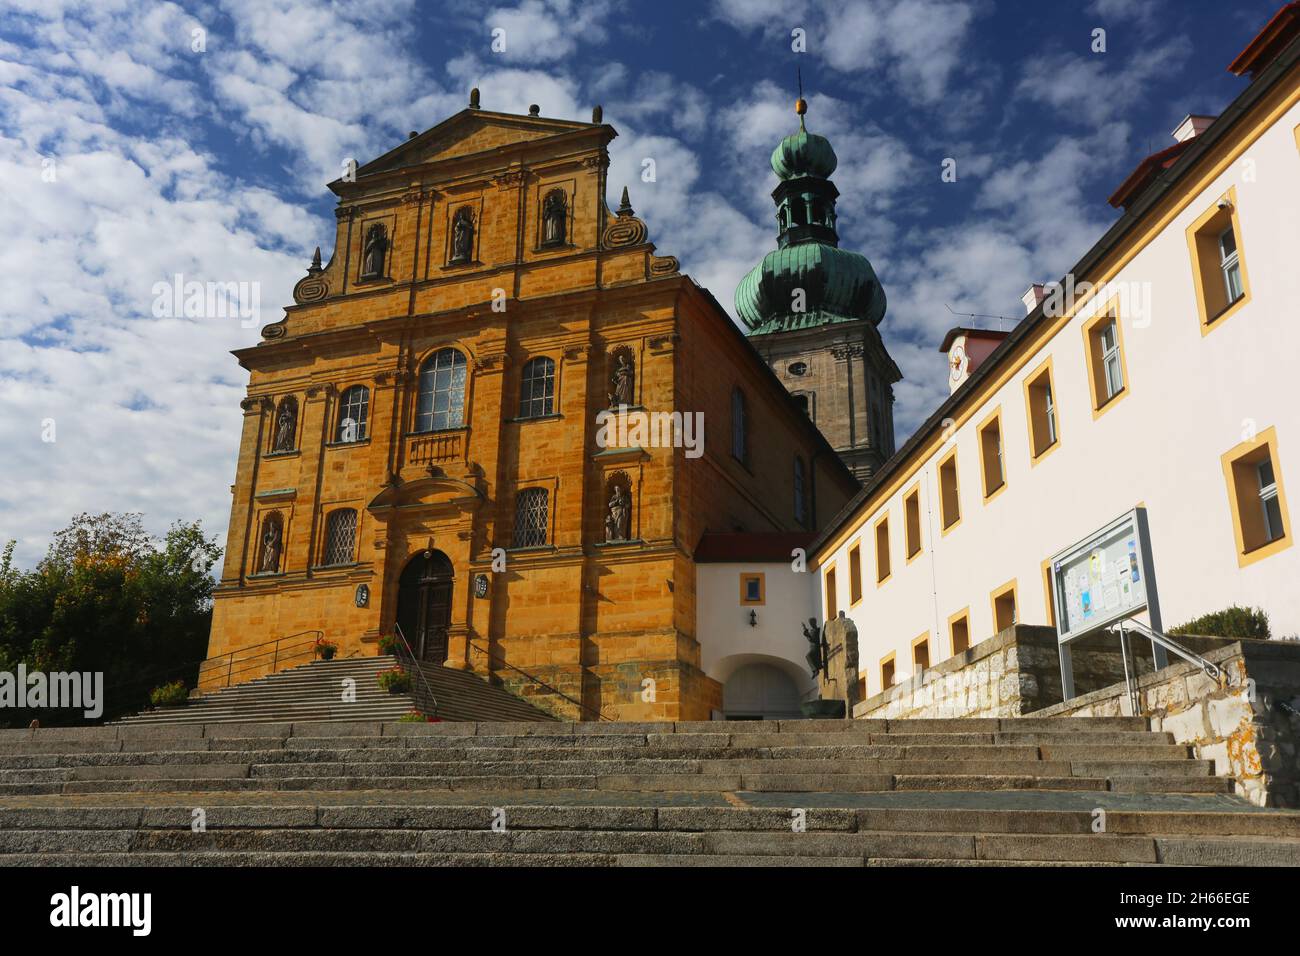 Wallfahrtskirche, Barockkirche, Amberg, ;Maria Hilf, Kirche, Bergkirche, Kirchturm in der Oberpfalz, Bayern! Foto de stock